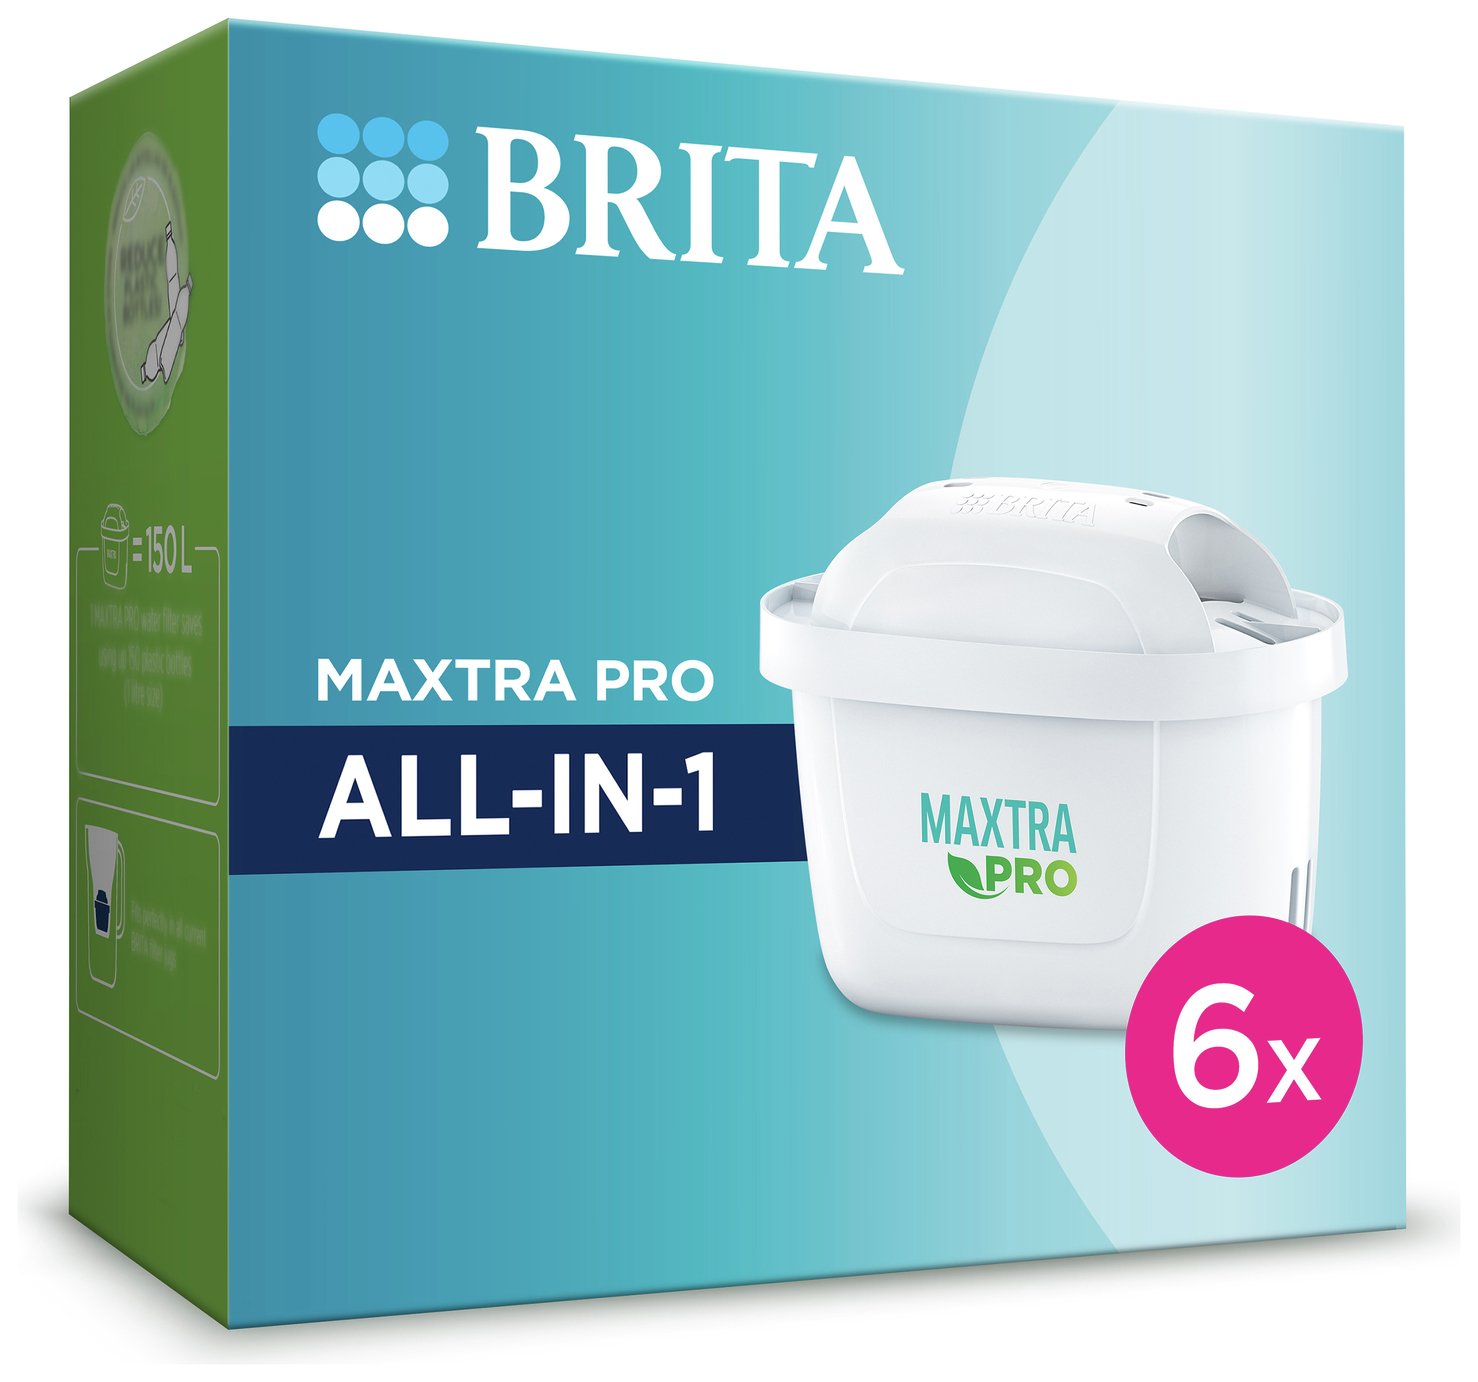 BRITA Marella XL 3.5 L starter pack + 3 Maxtra PRO filters (white)